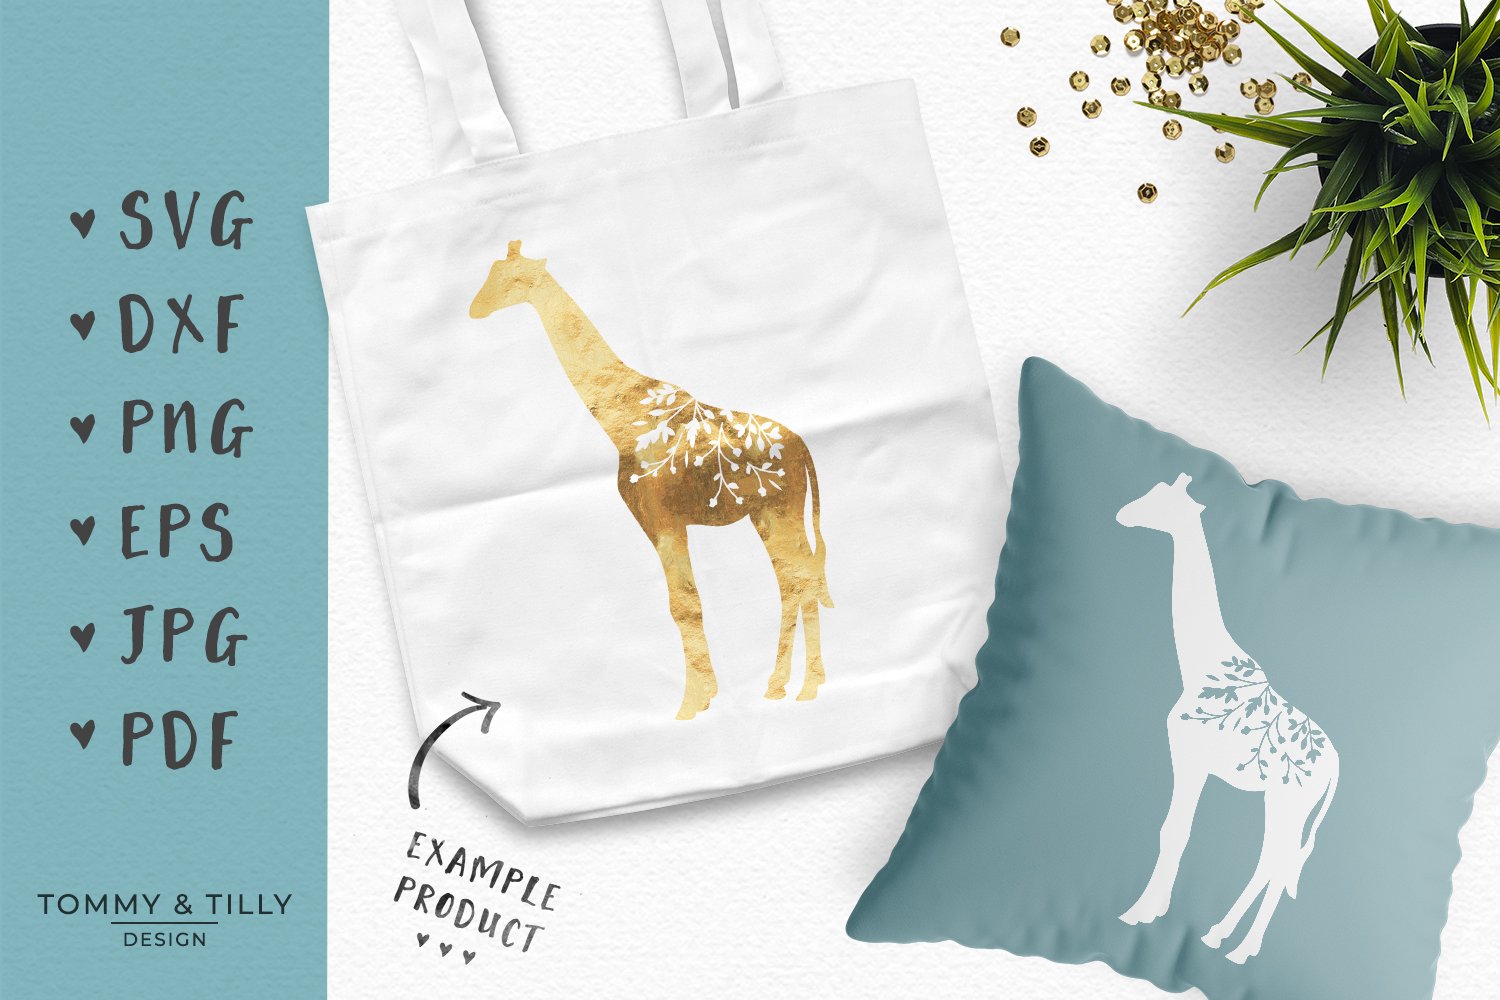 White eco bag with the cushion giraffe.